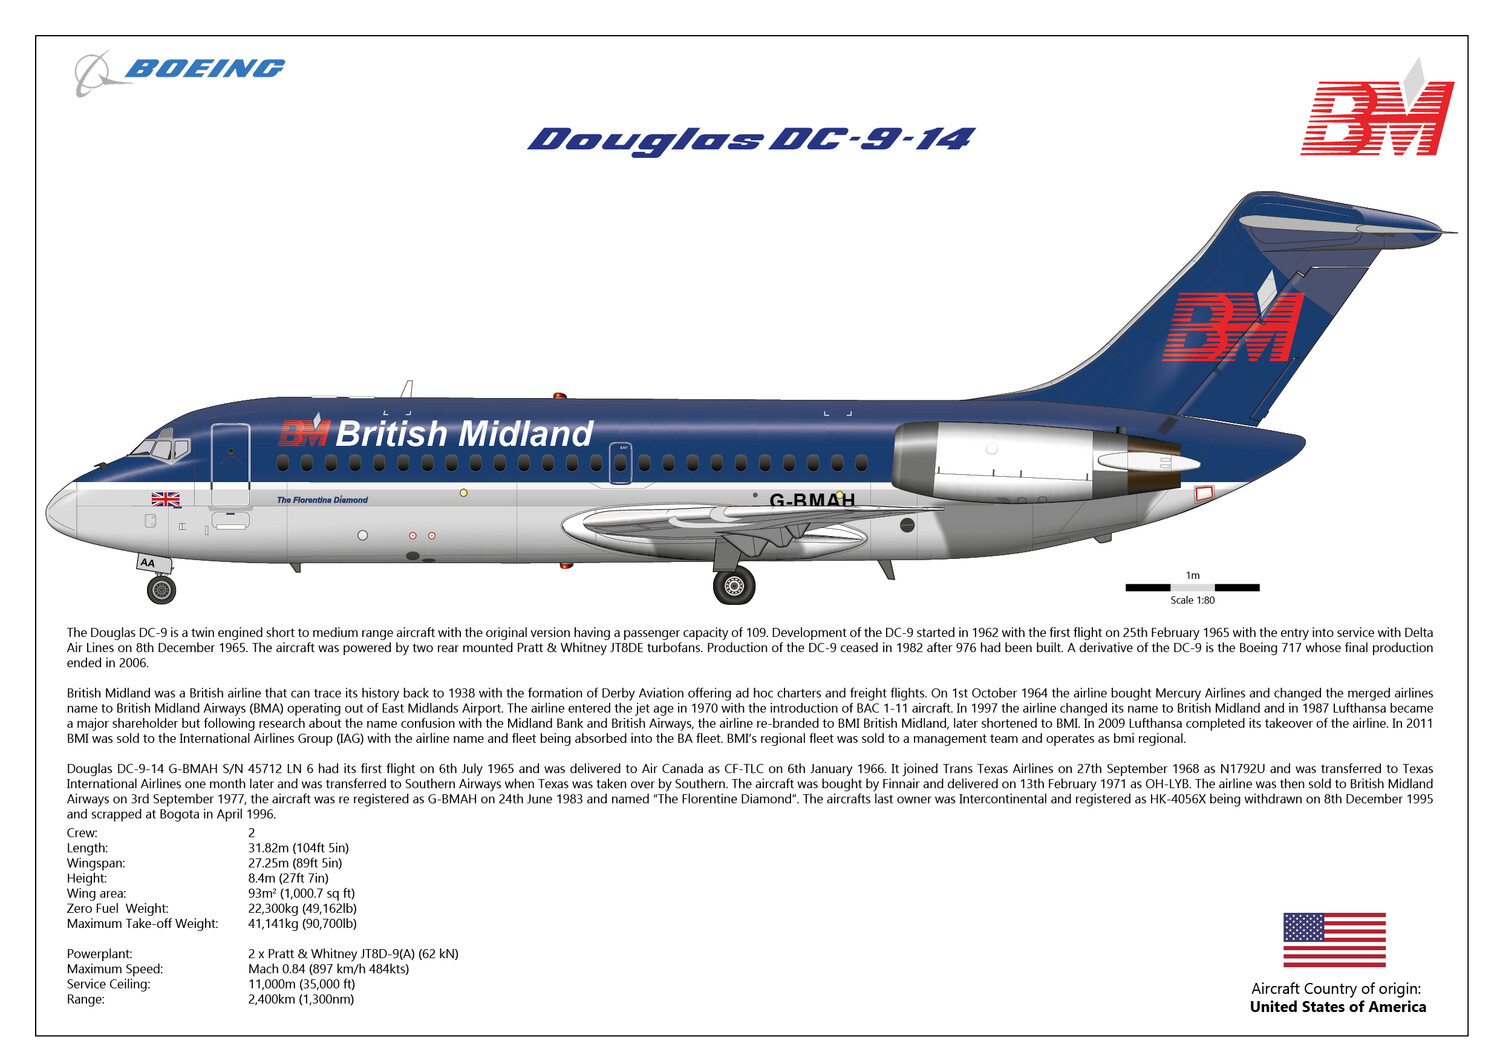 Douglas DC-9-14 of British Midland